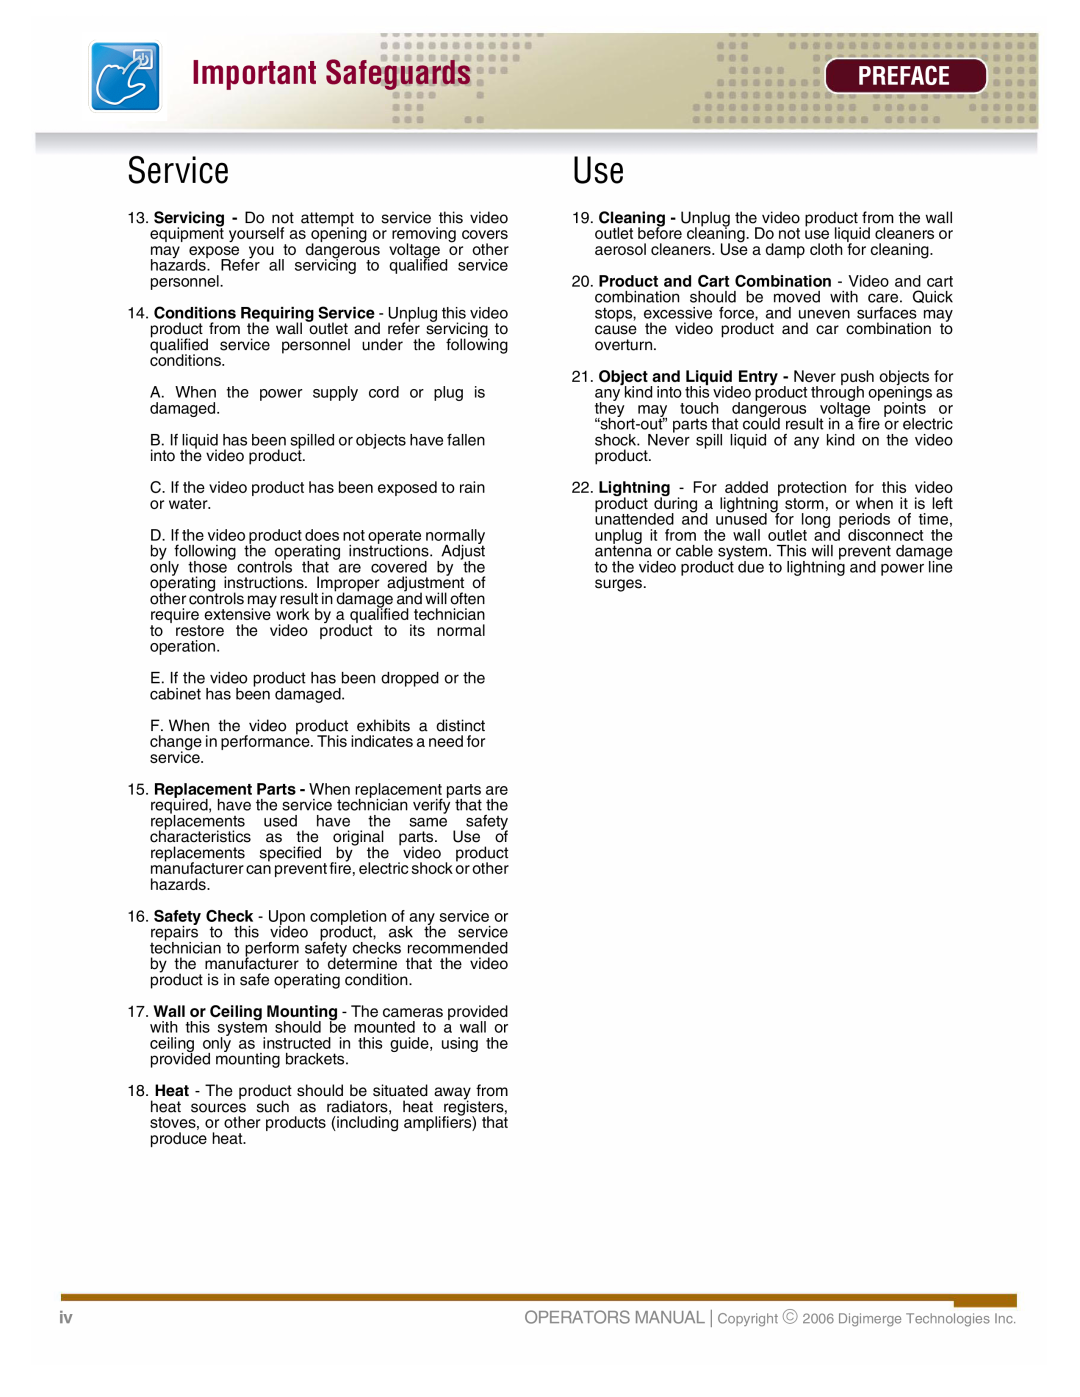 LOREX Technology DHU500 manual ServiceUse, Important Safeguards, Preface 